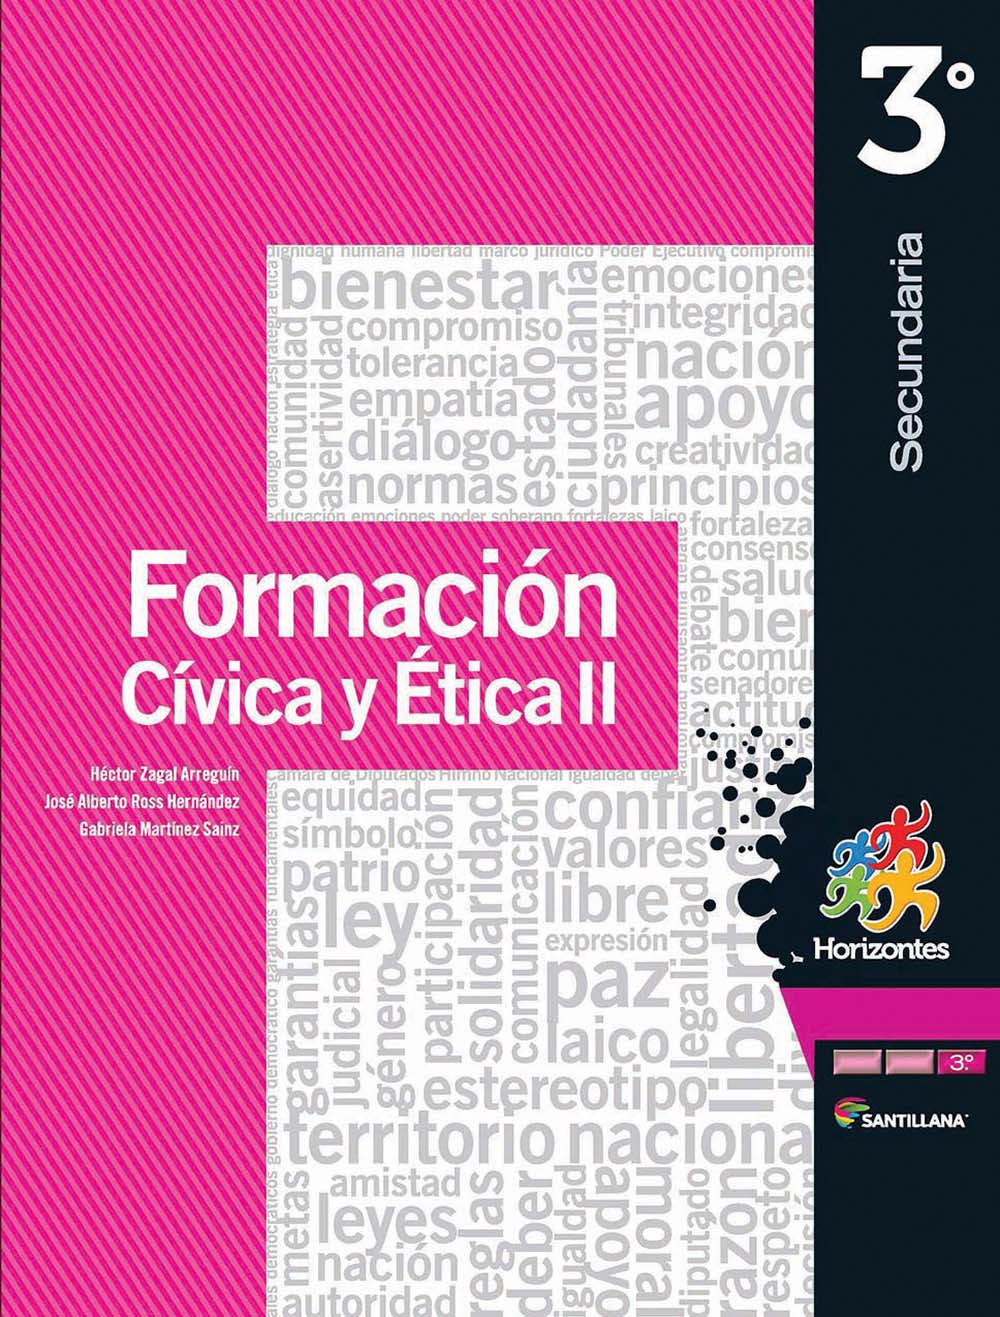 Formación Cívica y Ética ll. Santillana. Horizontes, Editorial: Santillana, Nivel: Secundaria, Grado: 3